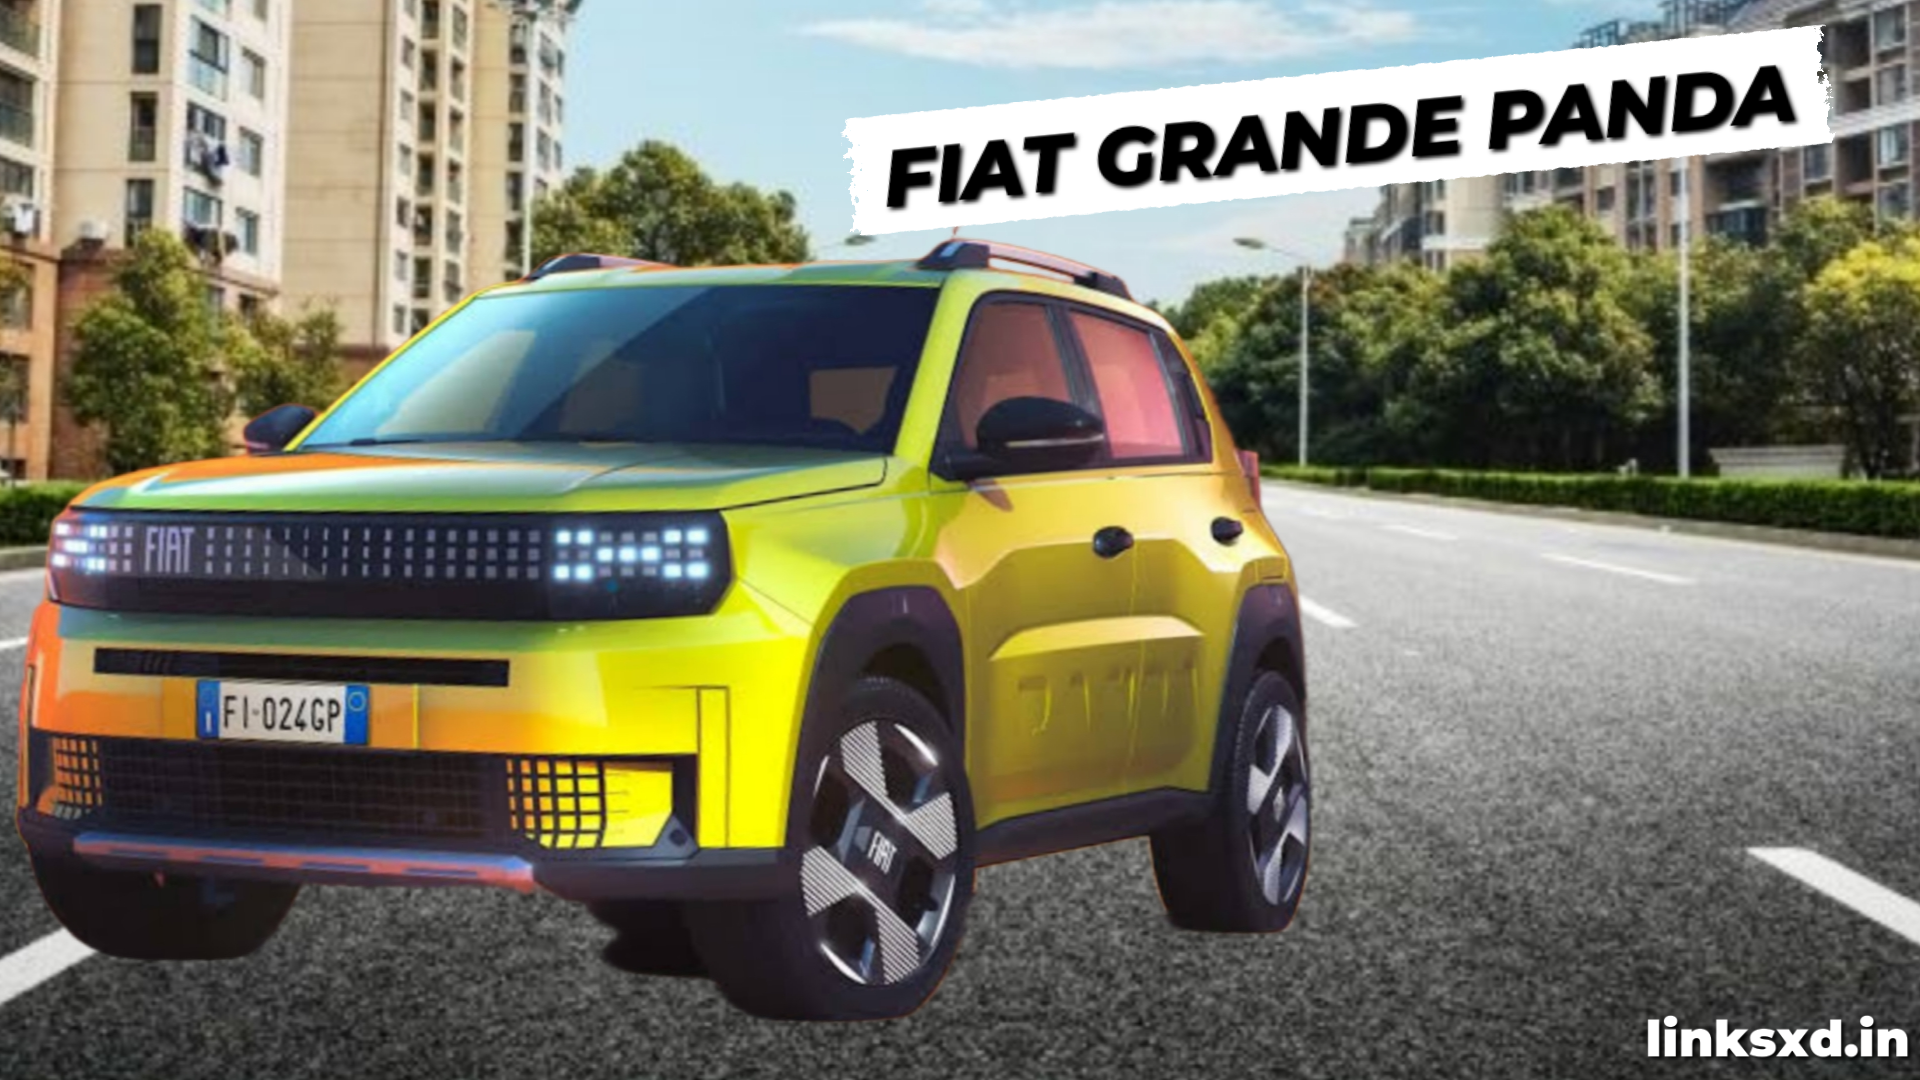 Fiat Grande Panda